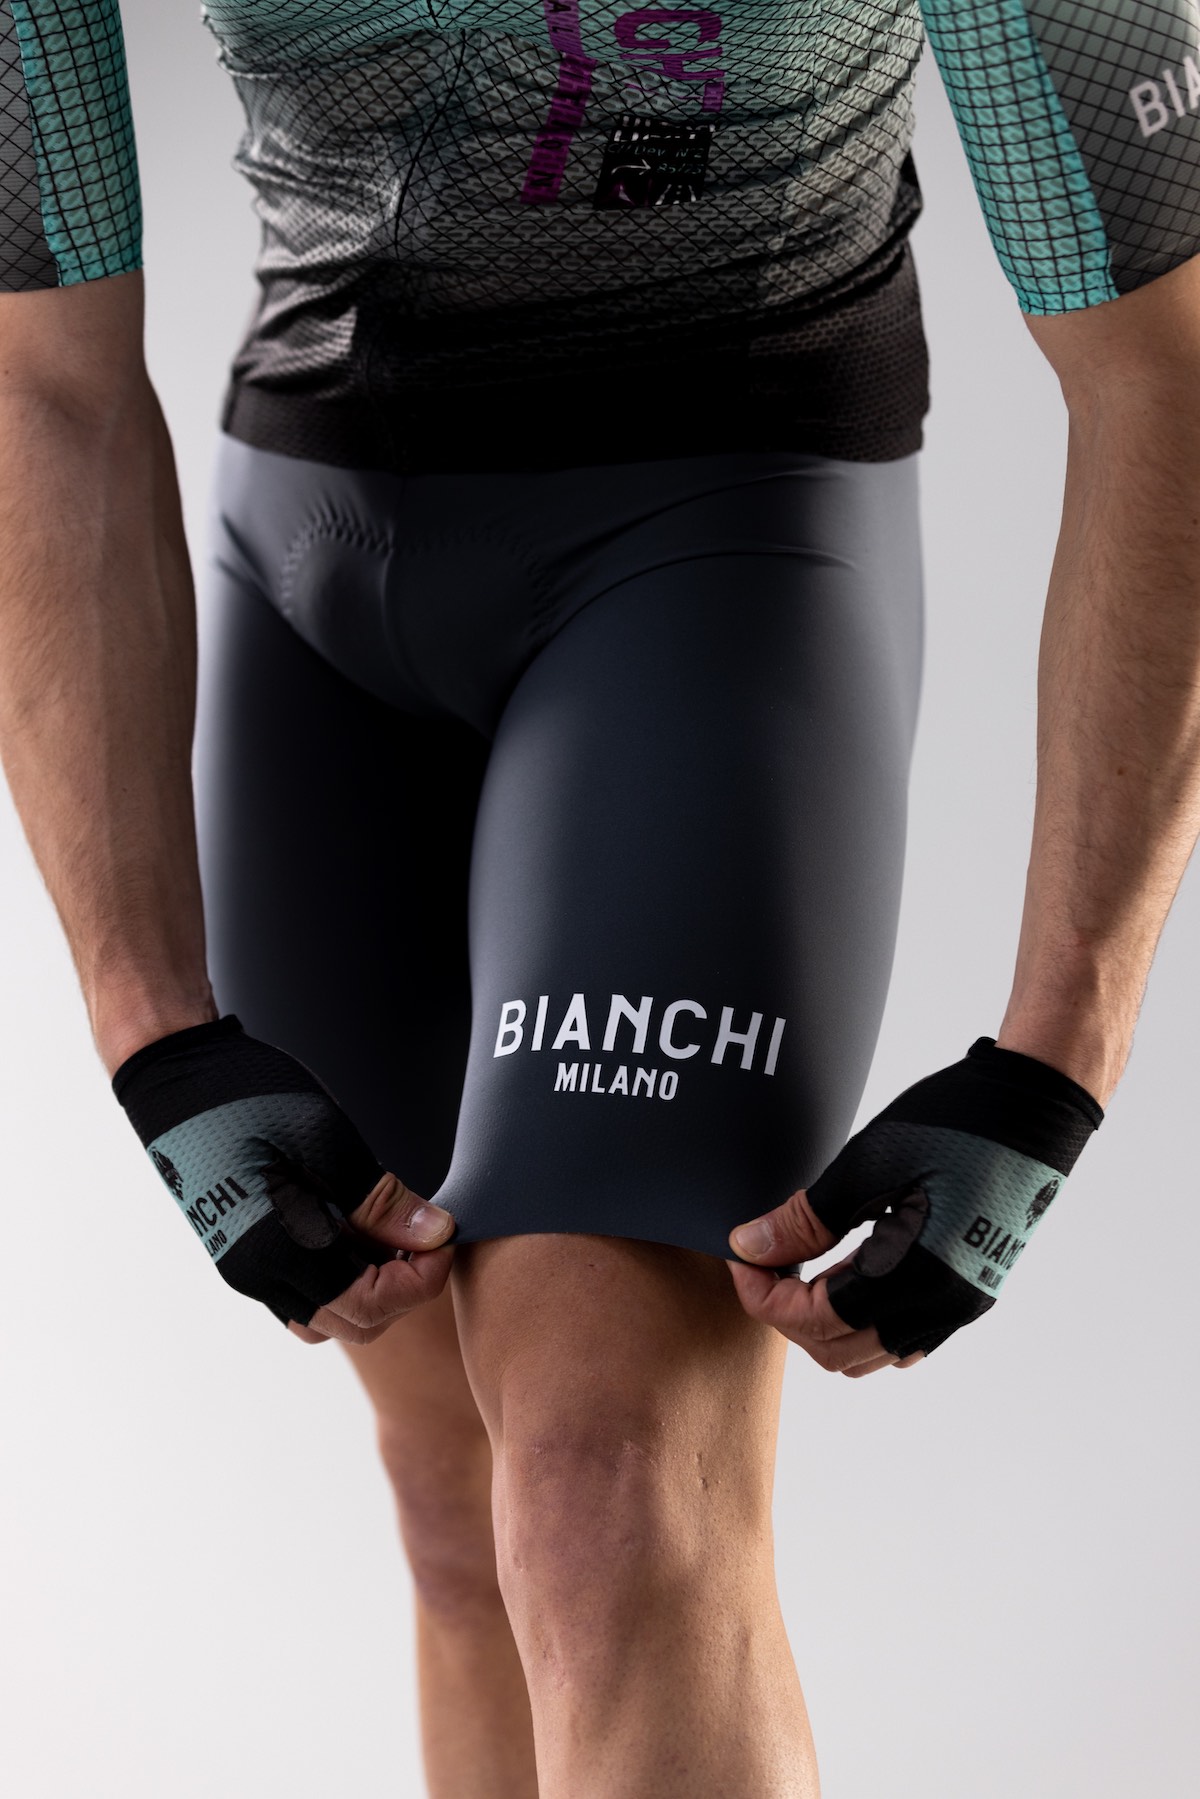 Bianchi Milano Ultralight